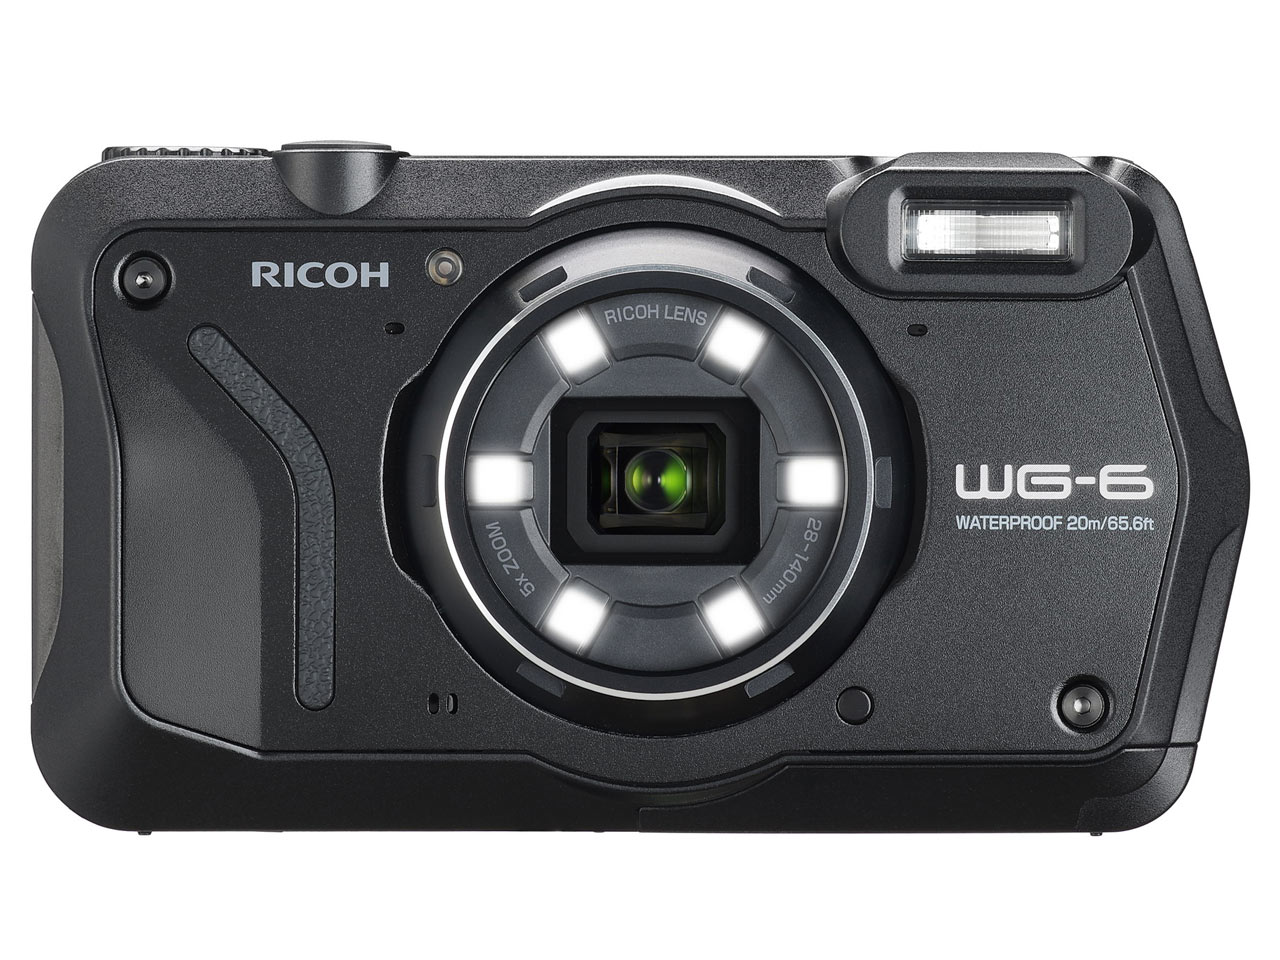 【RICOH】 デジタルカメラ WG-6 ブラック